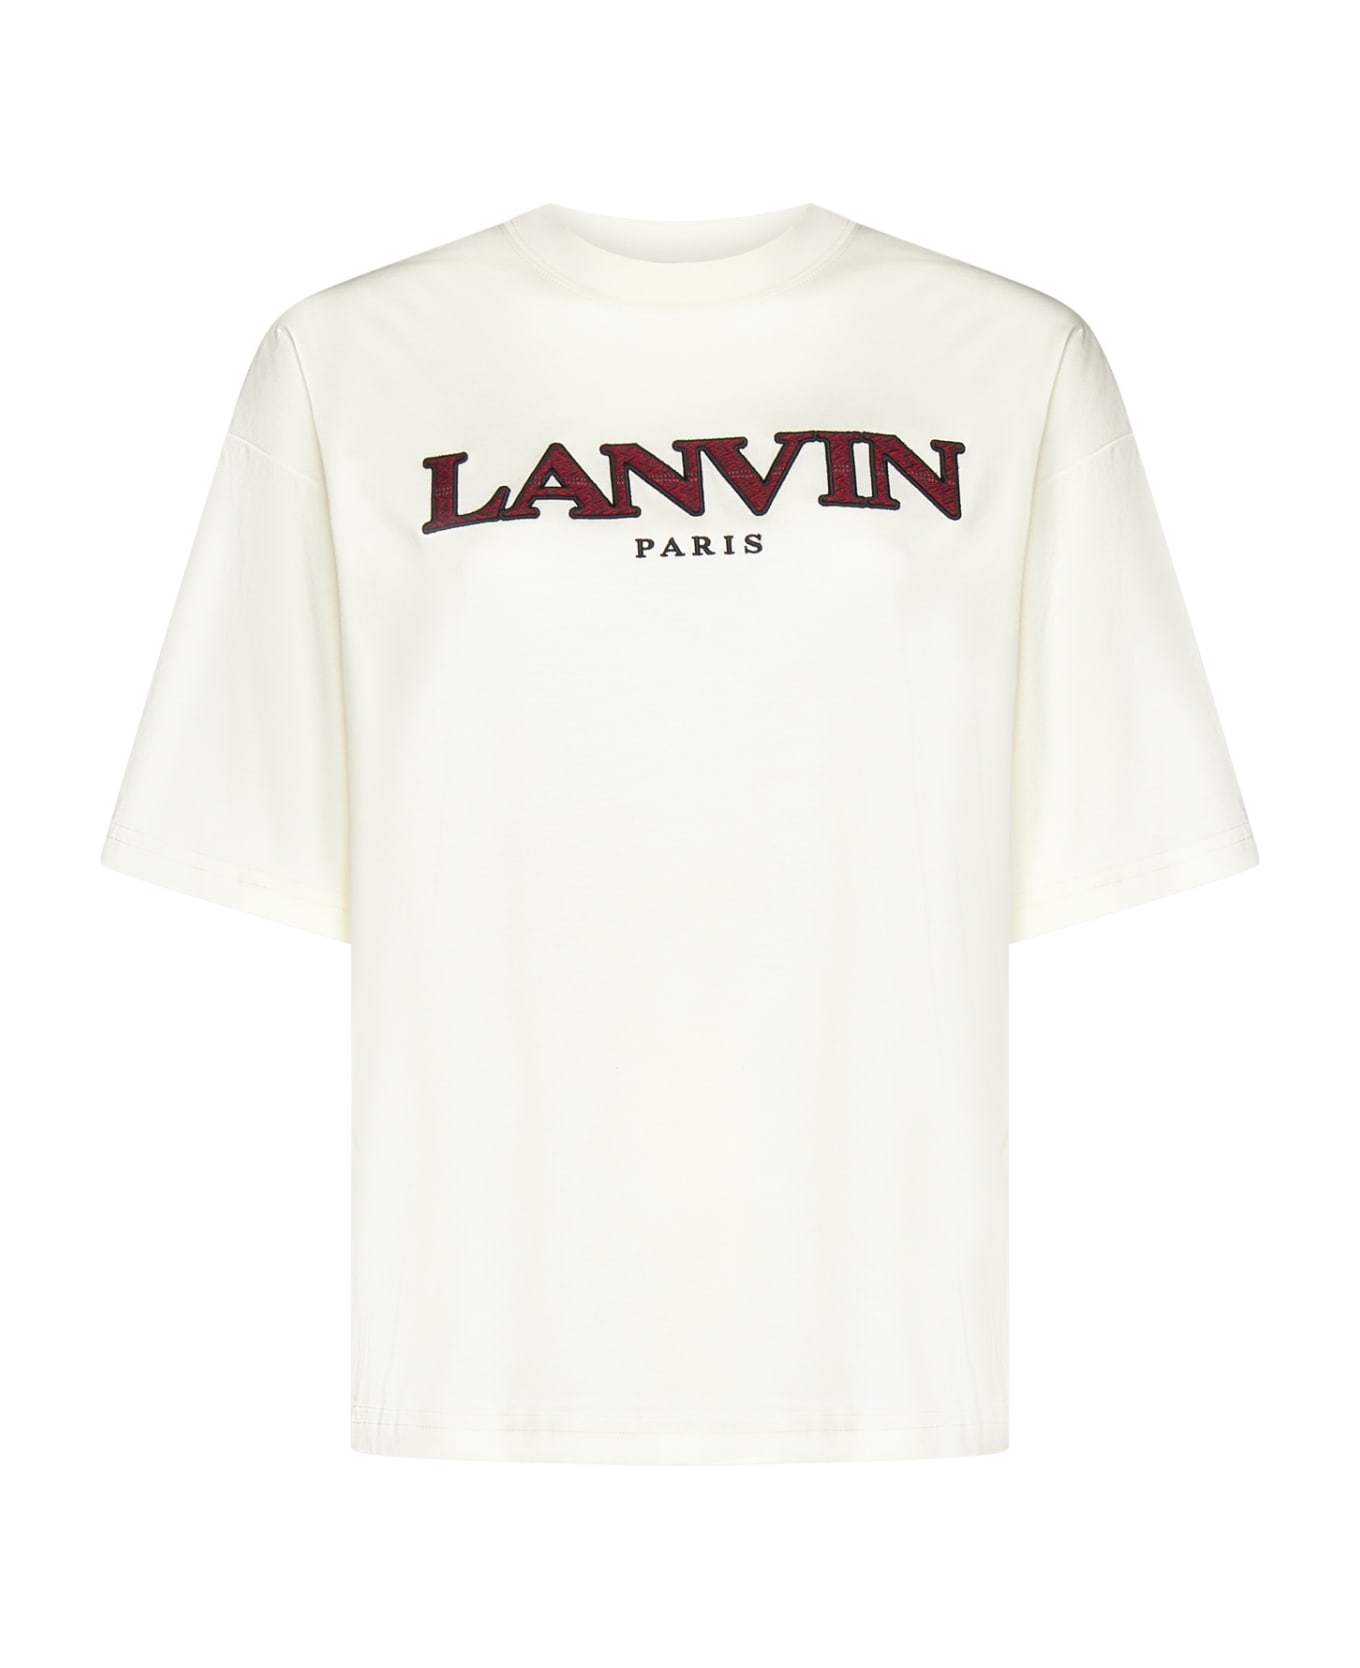 Lanvin T-Shirt - Cream Tシャツ